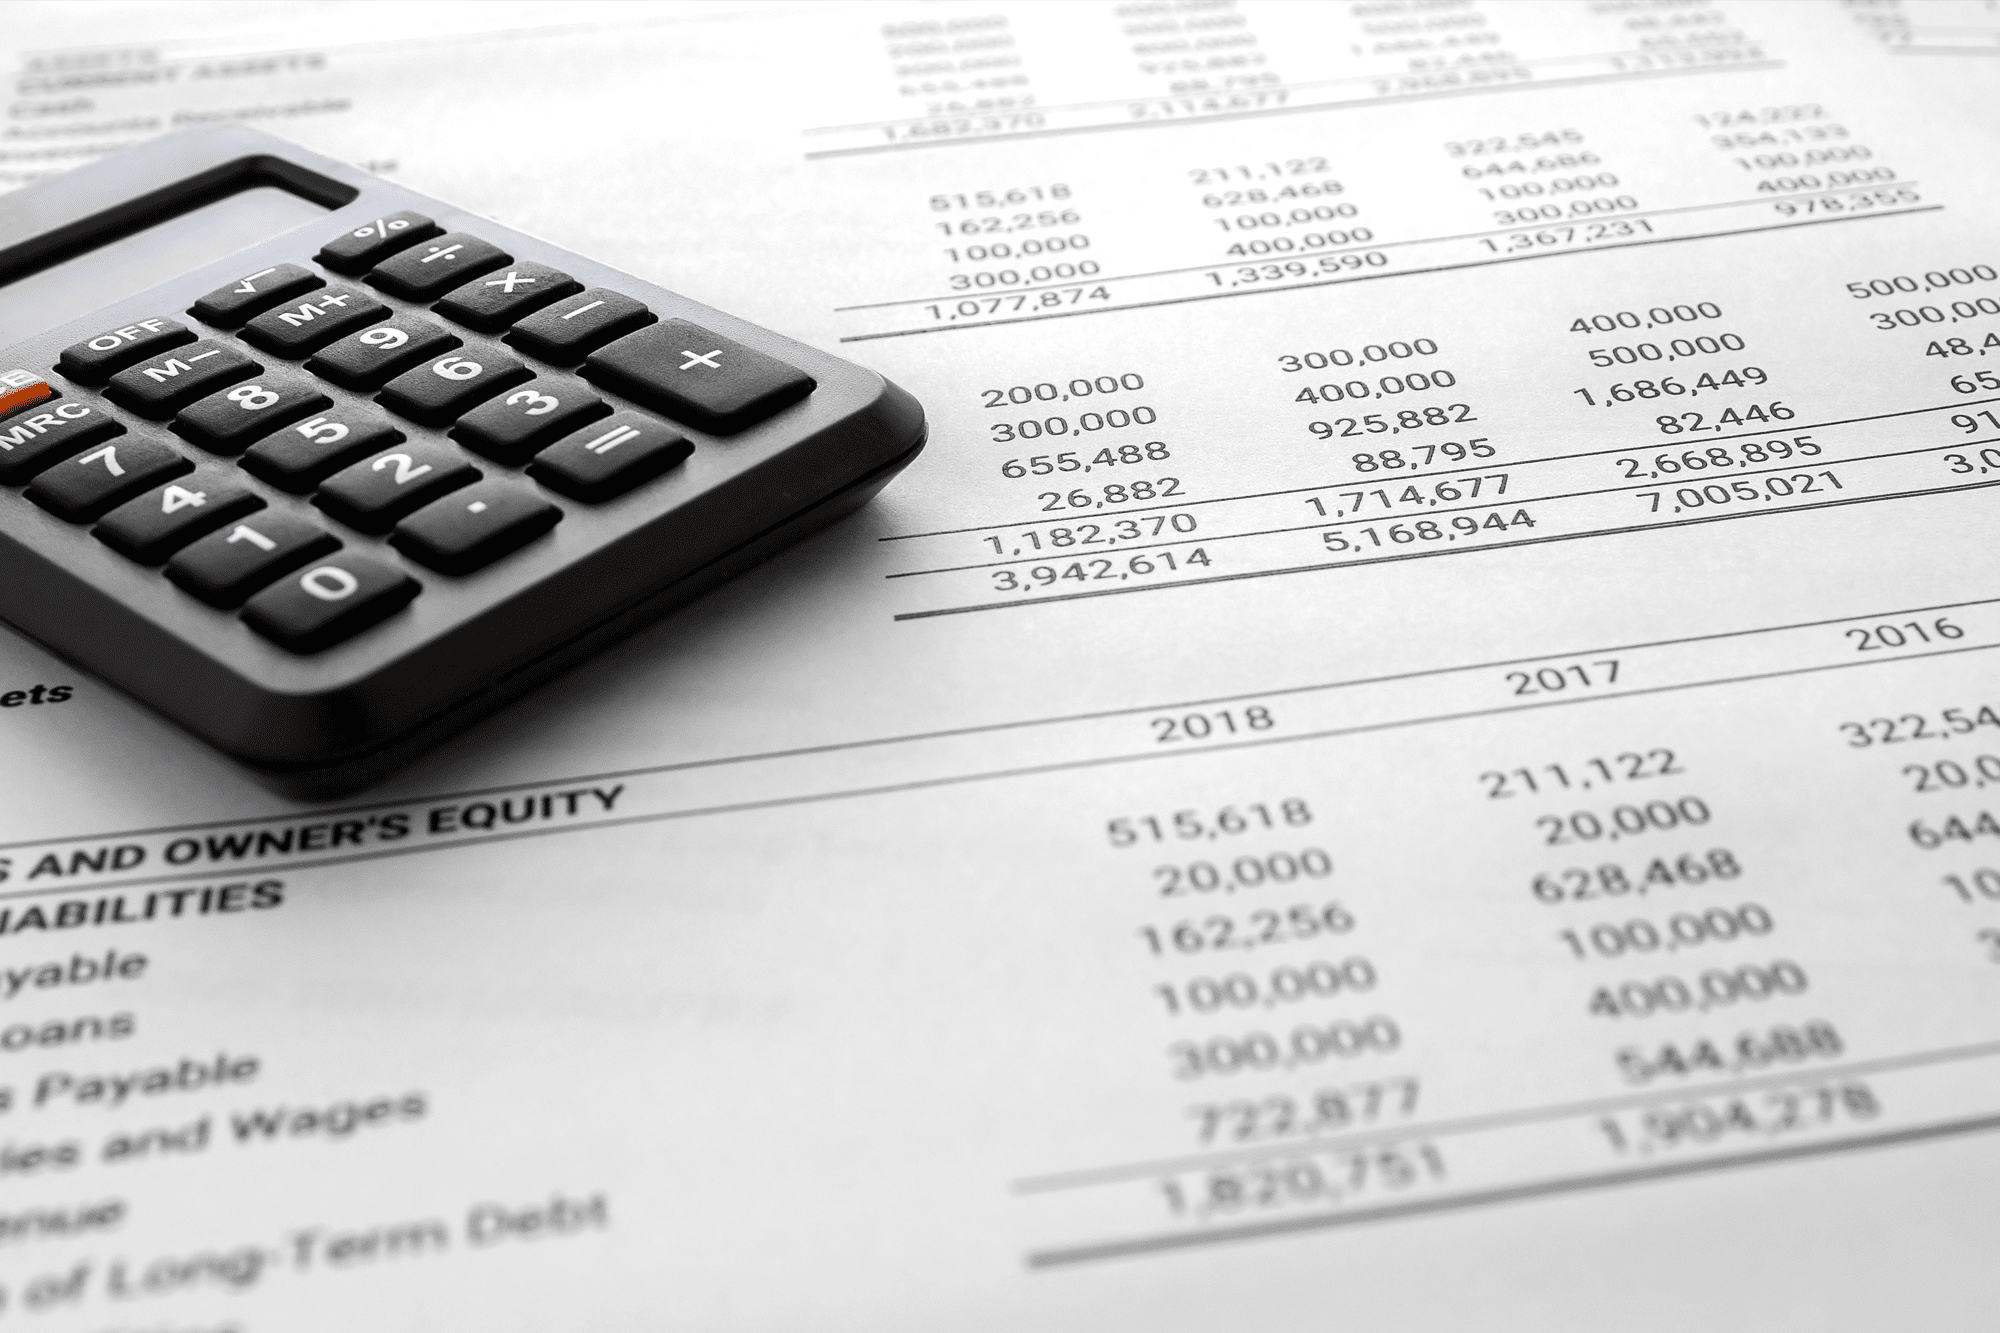 Financial statement / Balance sheet summary report and calculator.